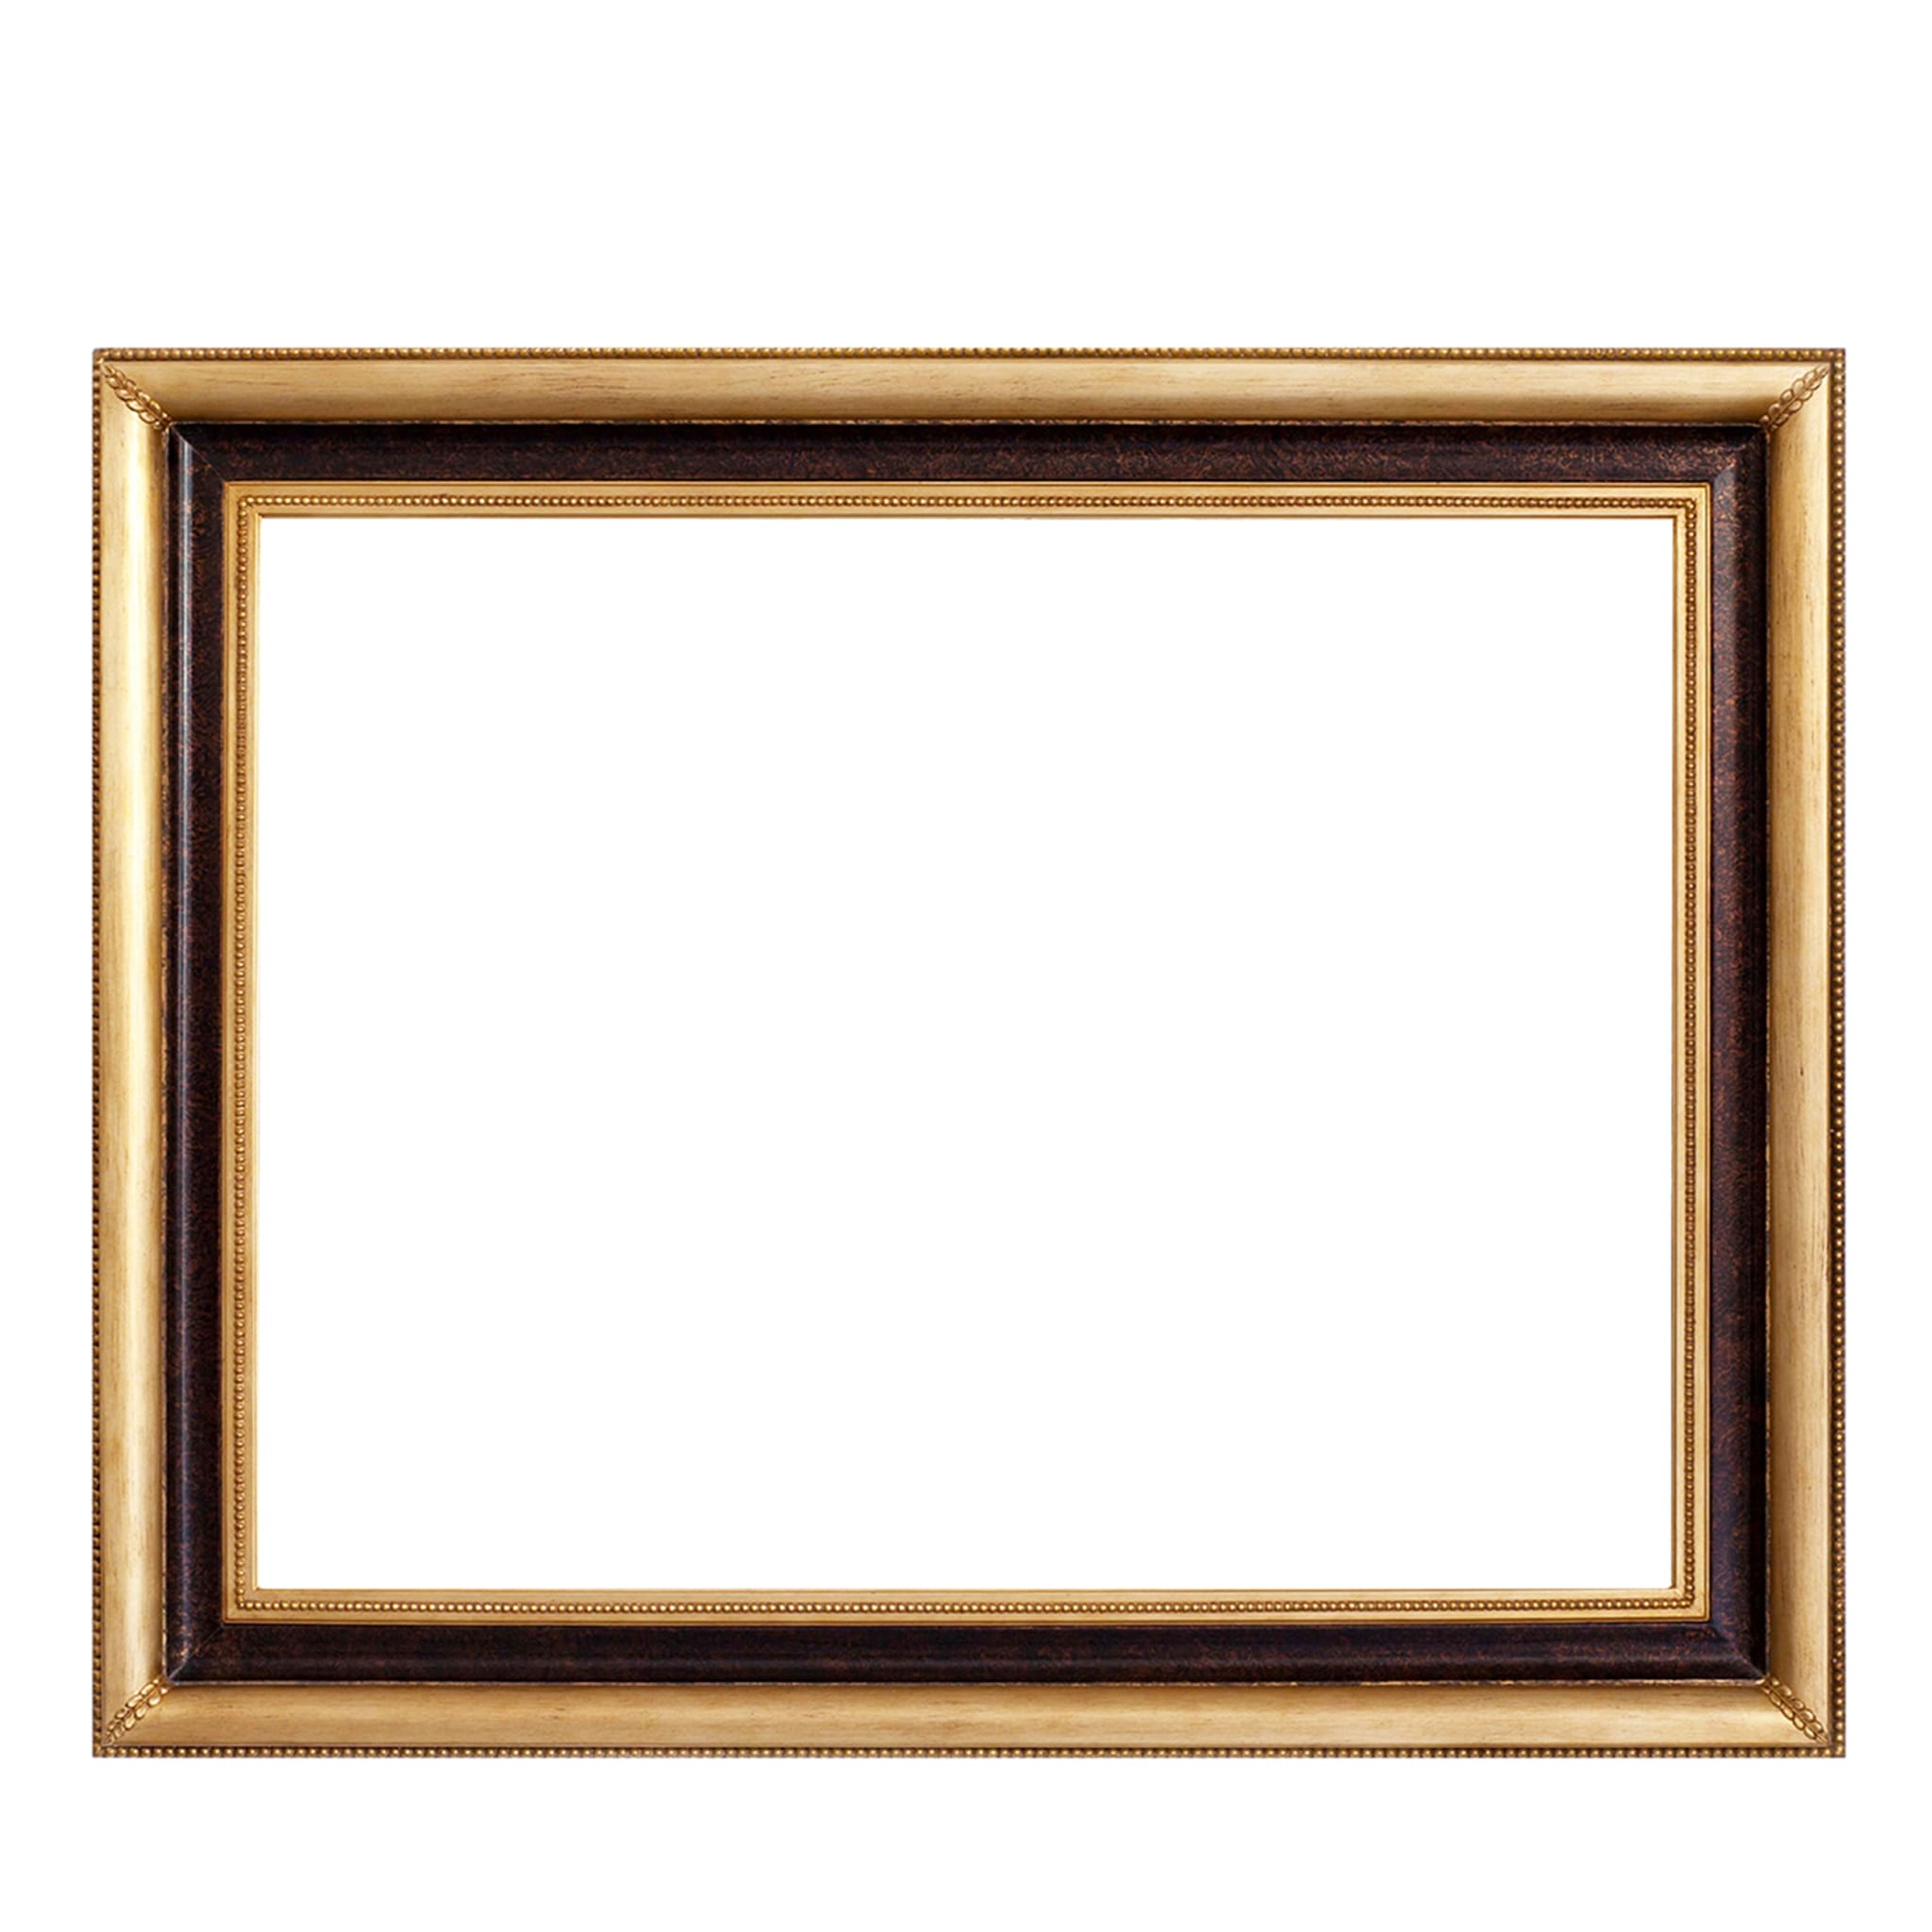 Salvator Rosa Frame #3 - Main view